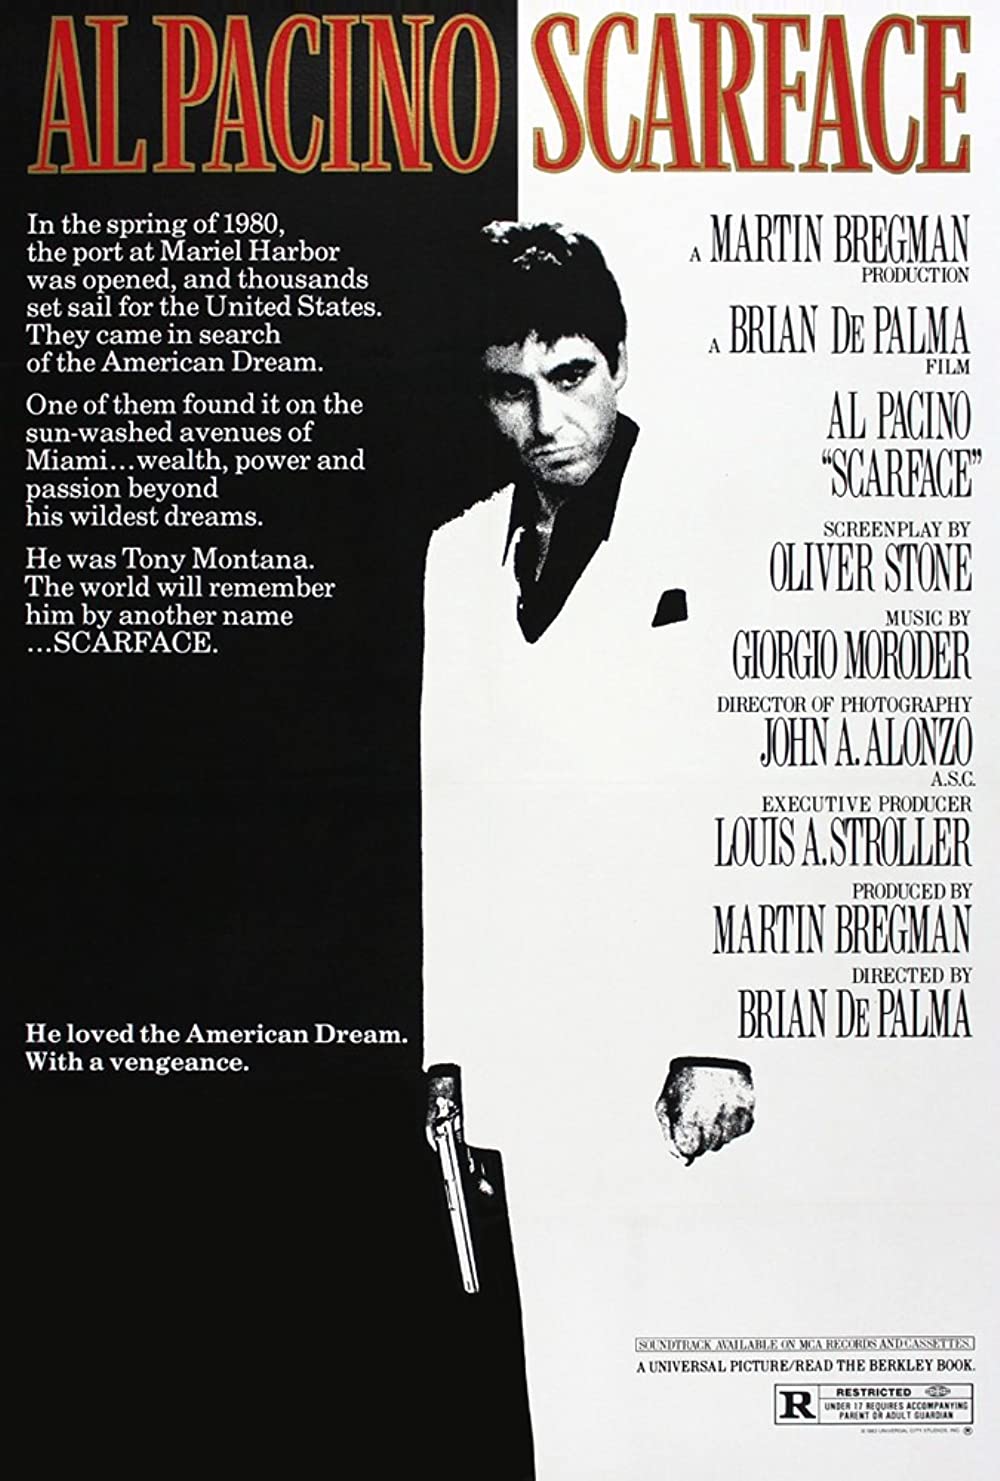 Filmbeschreibung zu Scarface (1983)